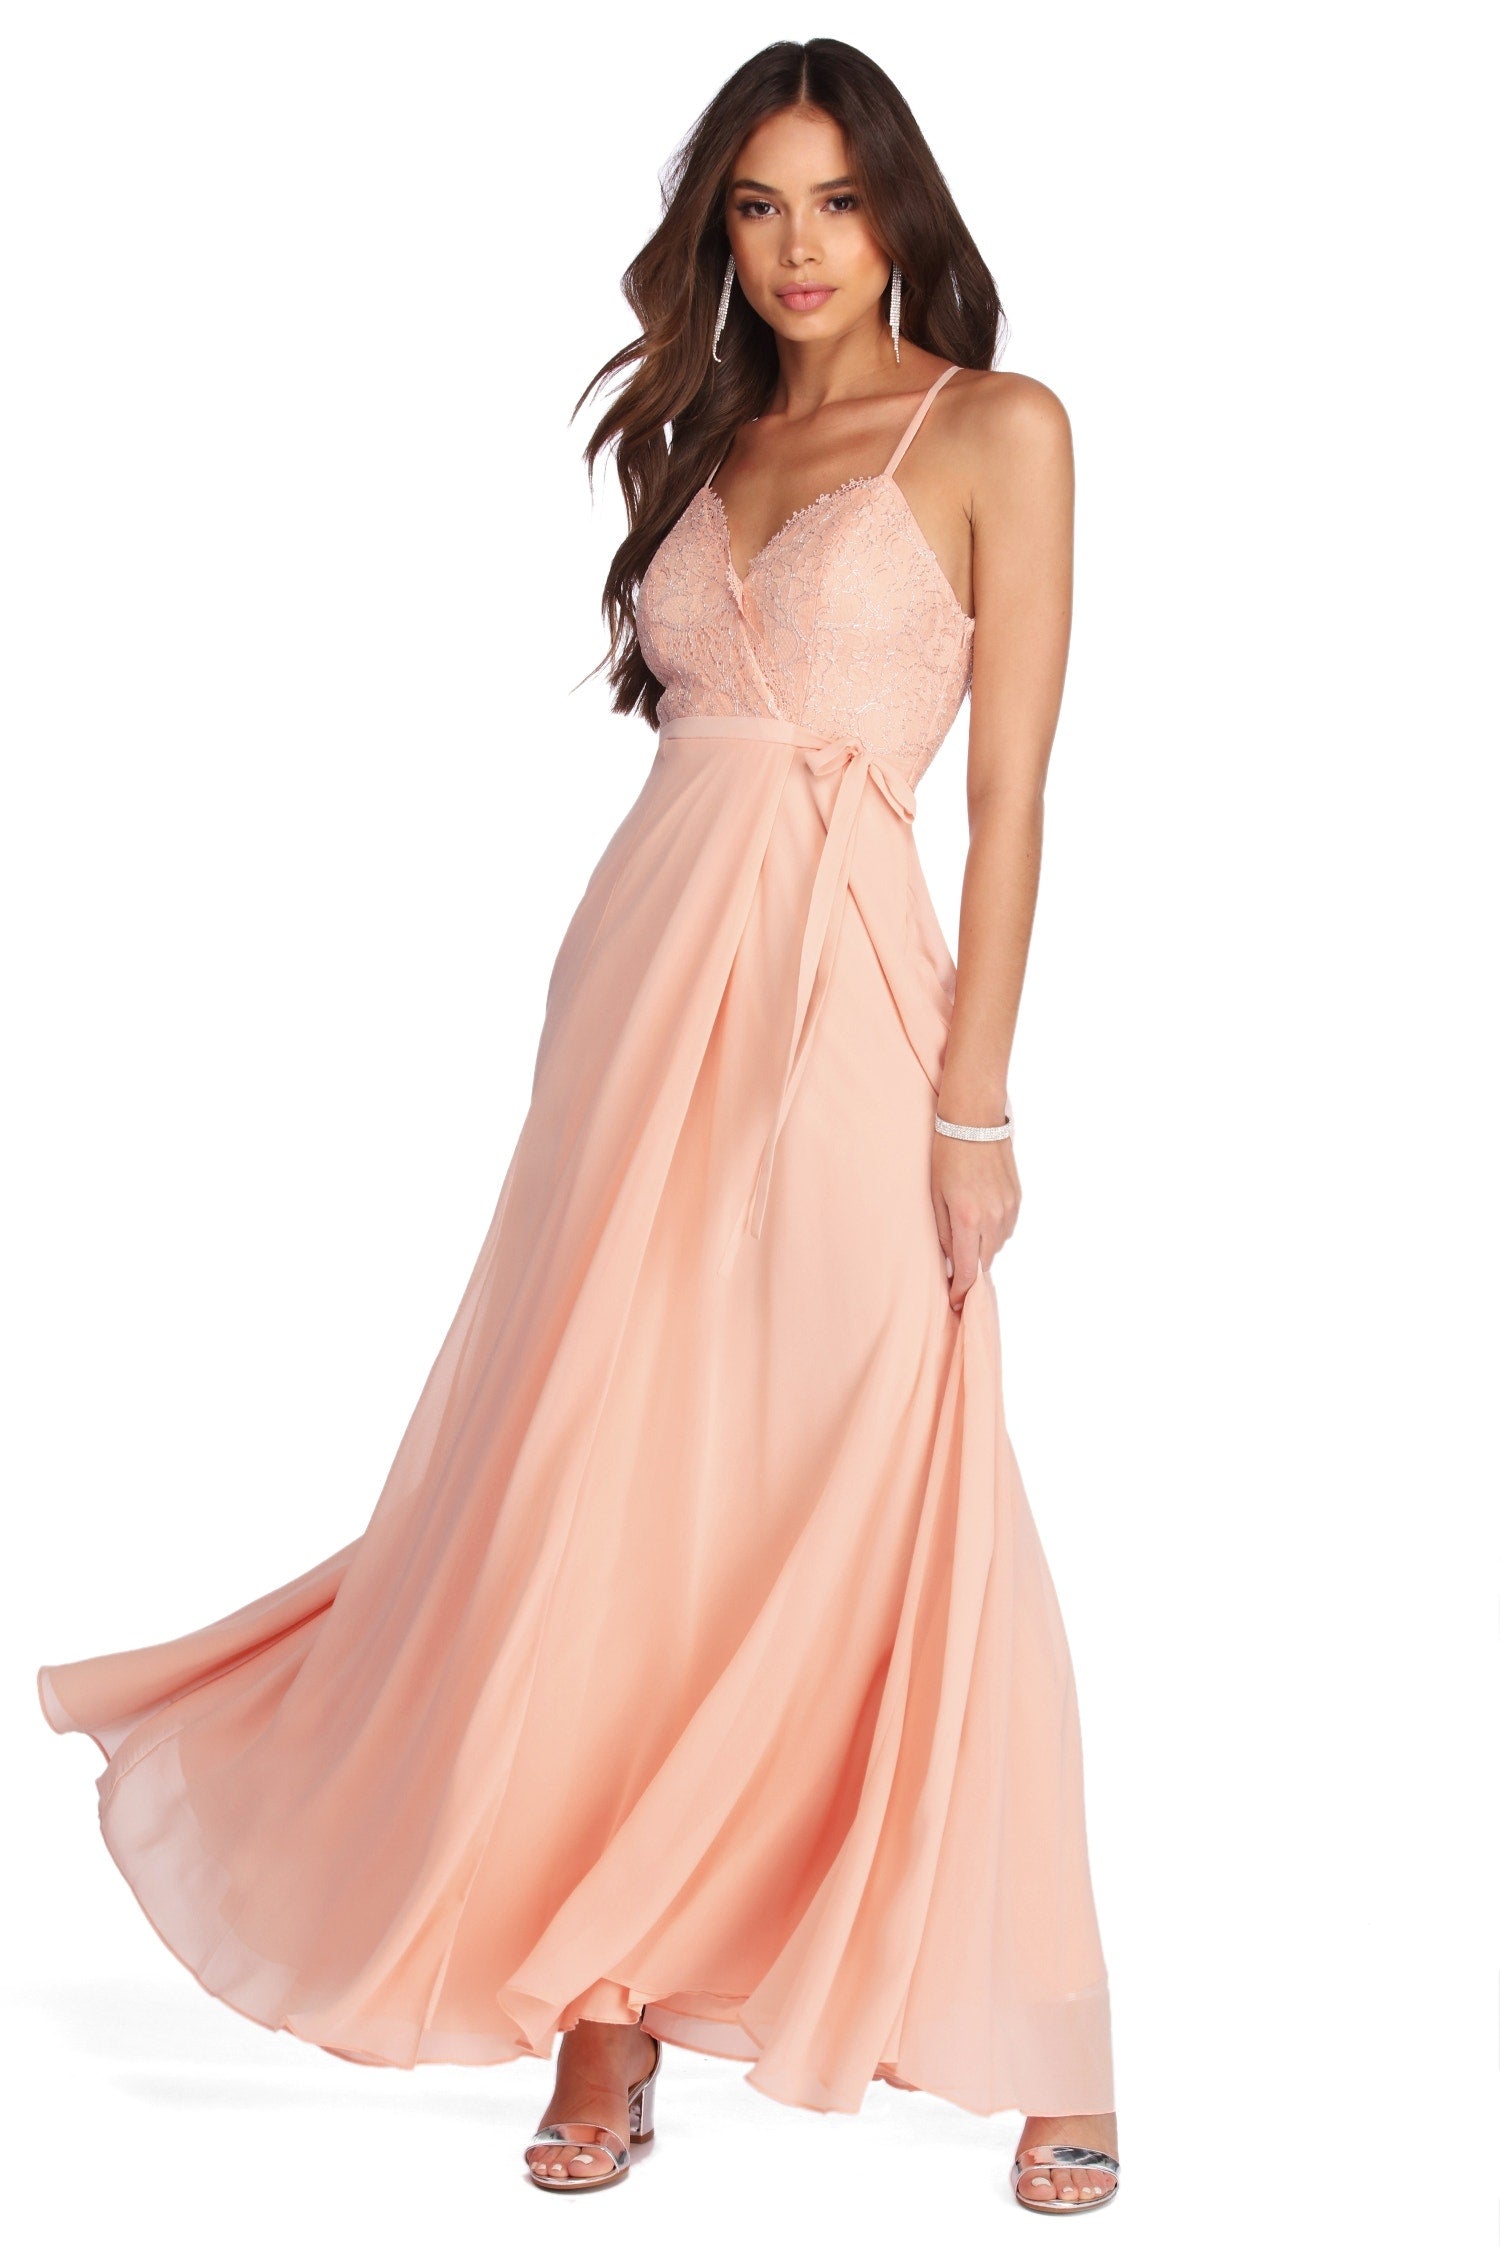 Serenity Formal Lace And Chiffon Dress